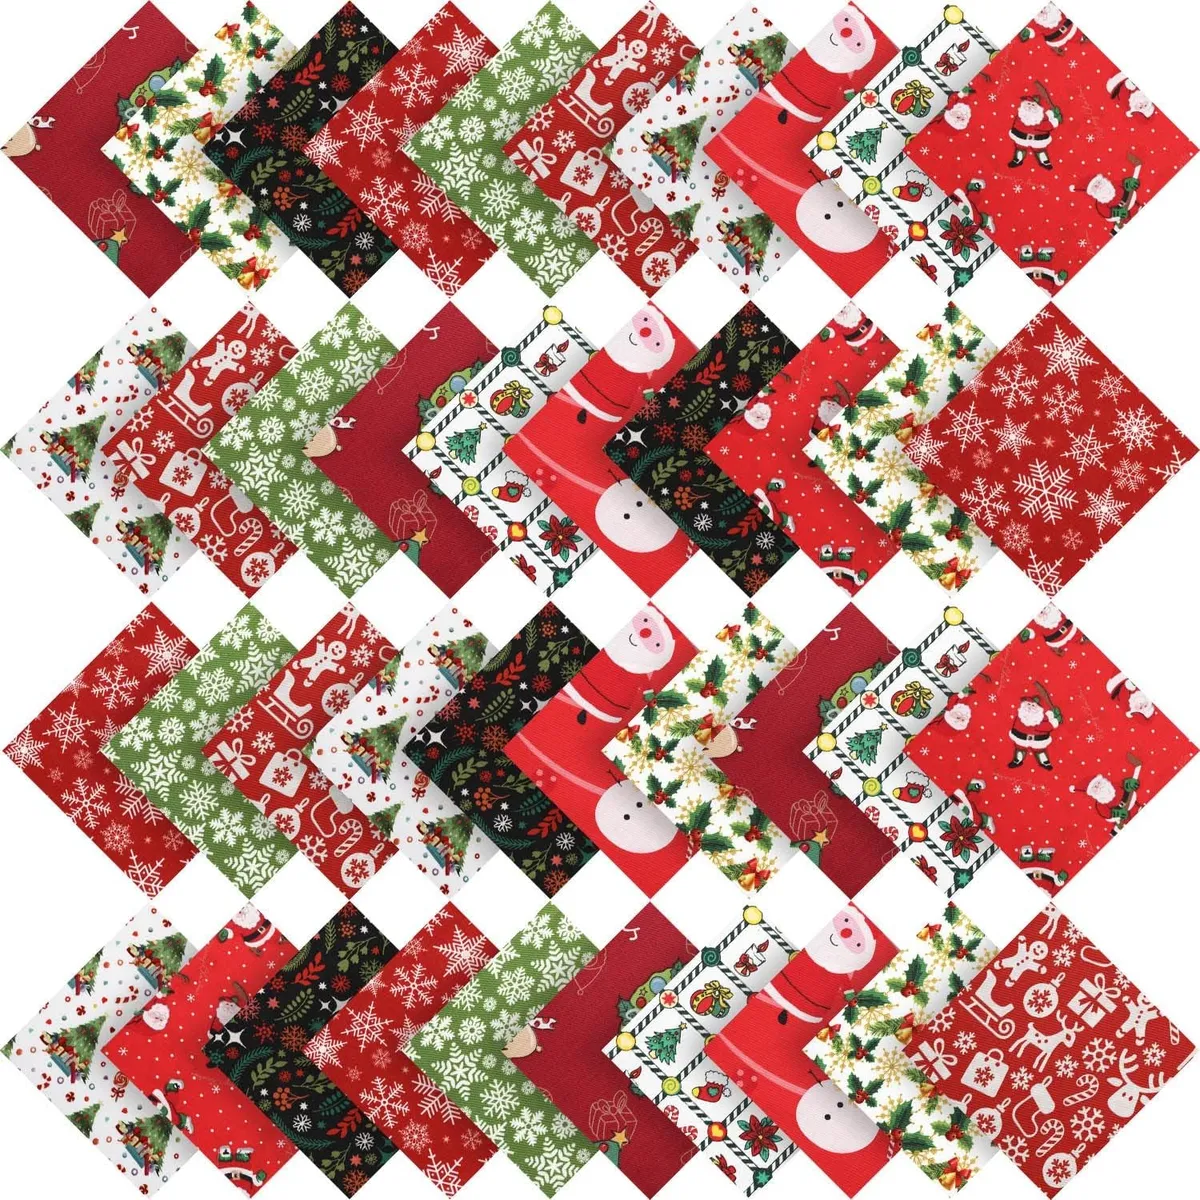 Irenare 50 Pieces Christmas Cotton Fabric